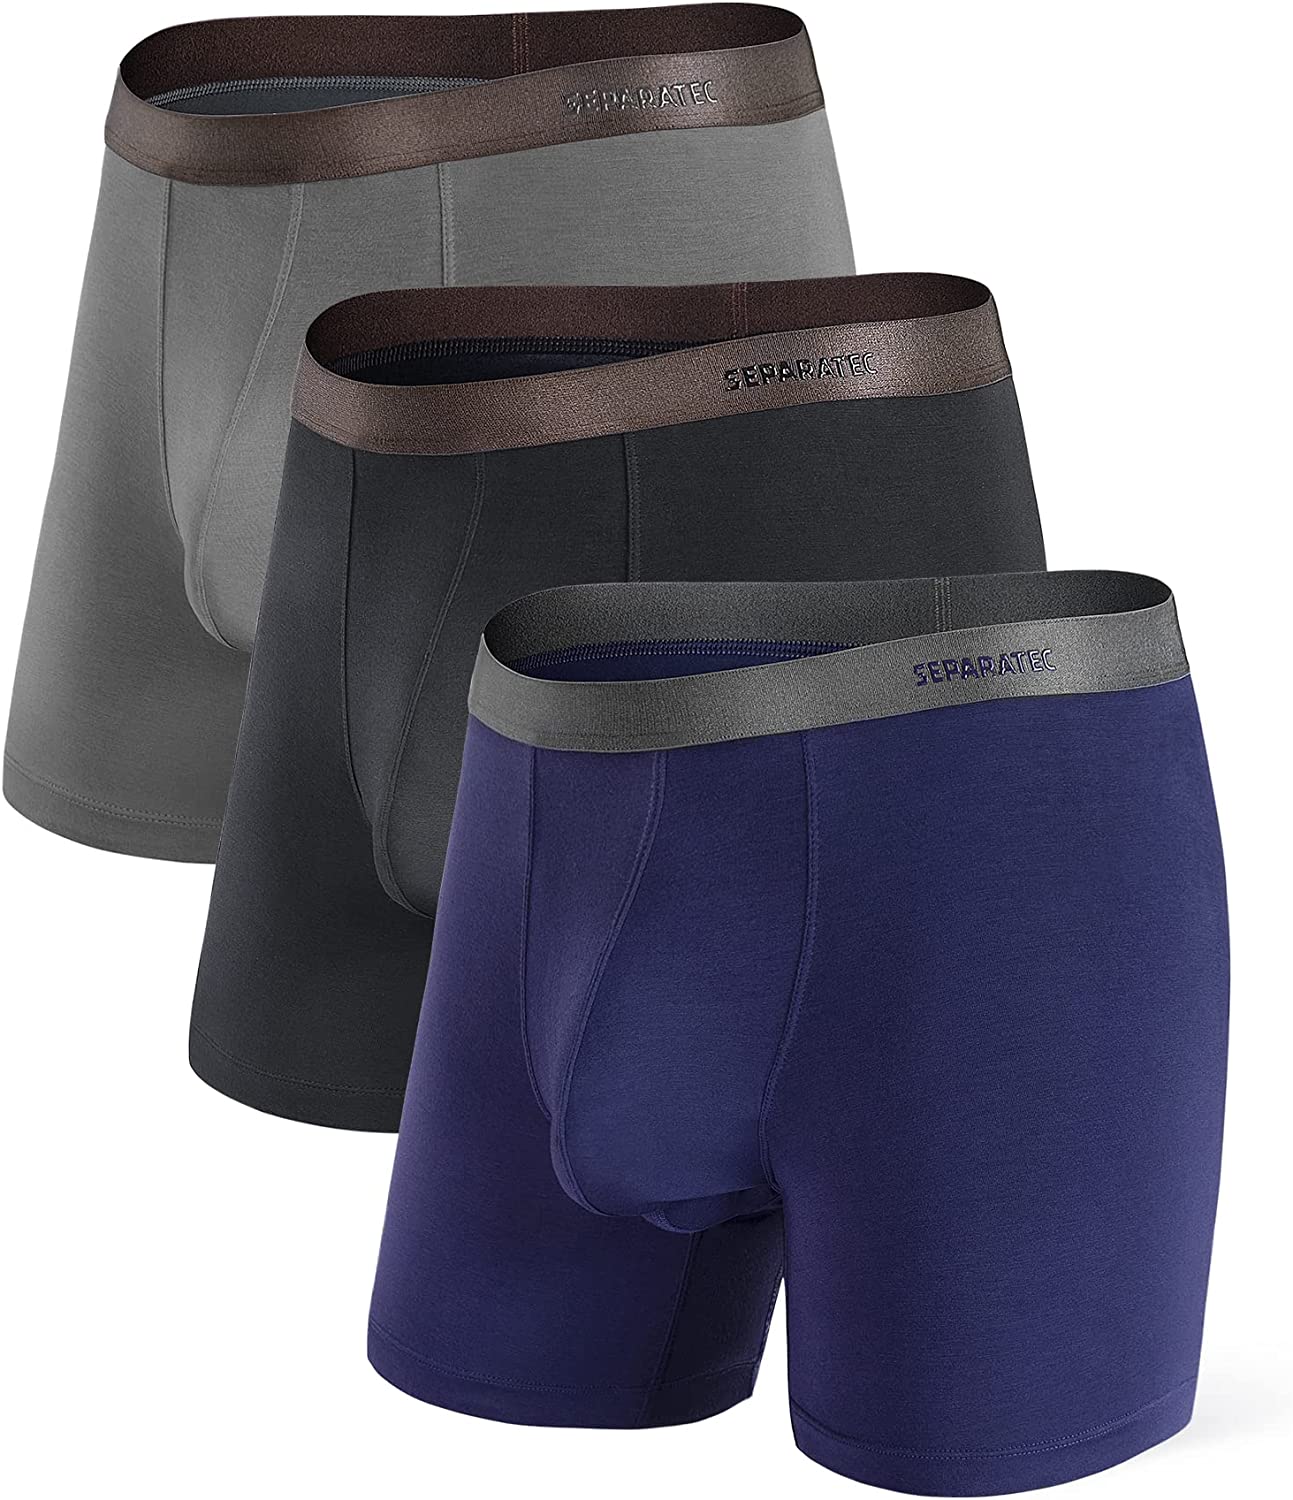 Separatec Men's Underwear Trunks 2.0 Seamless Bamboo Rayon